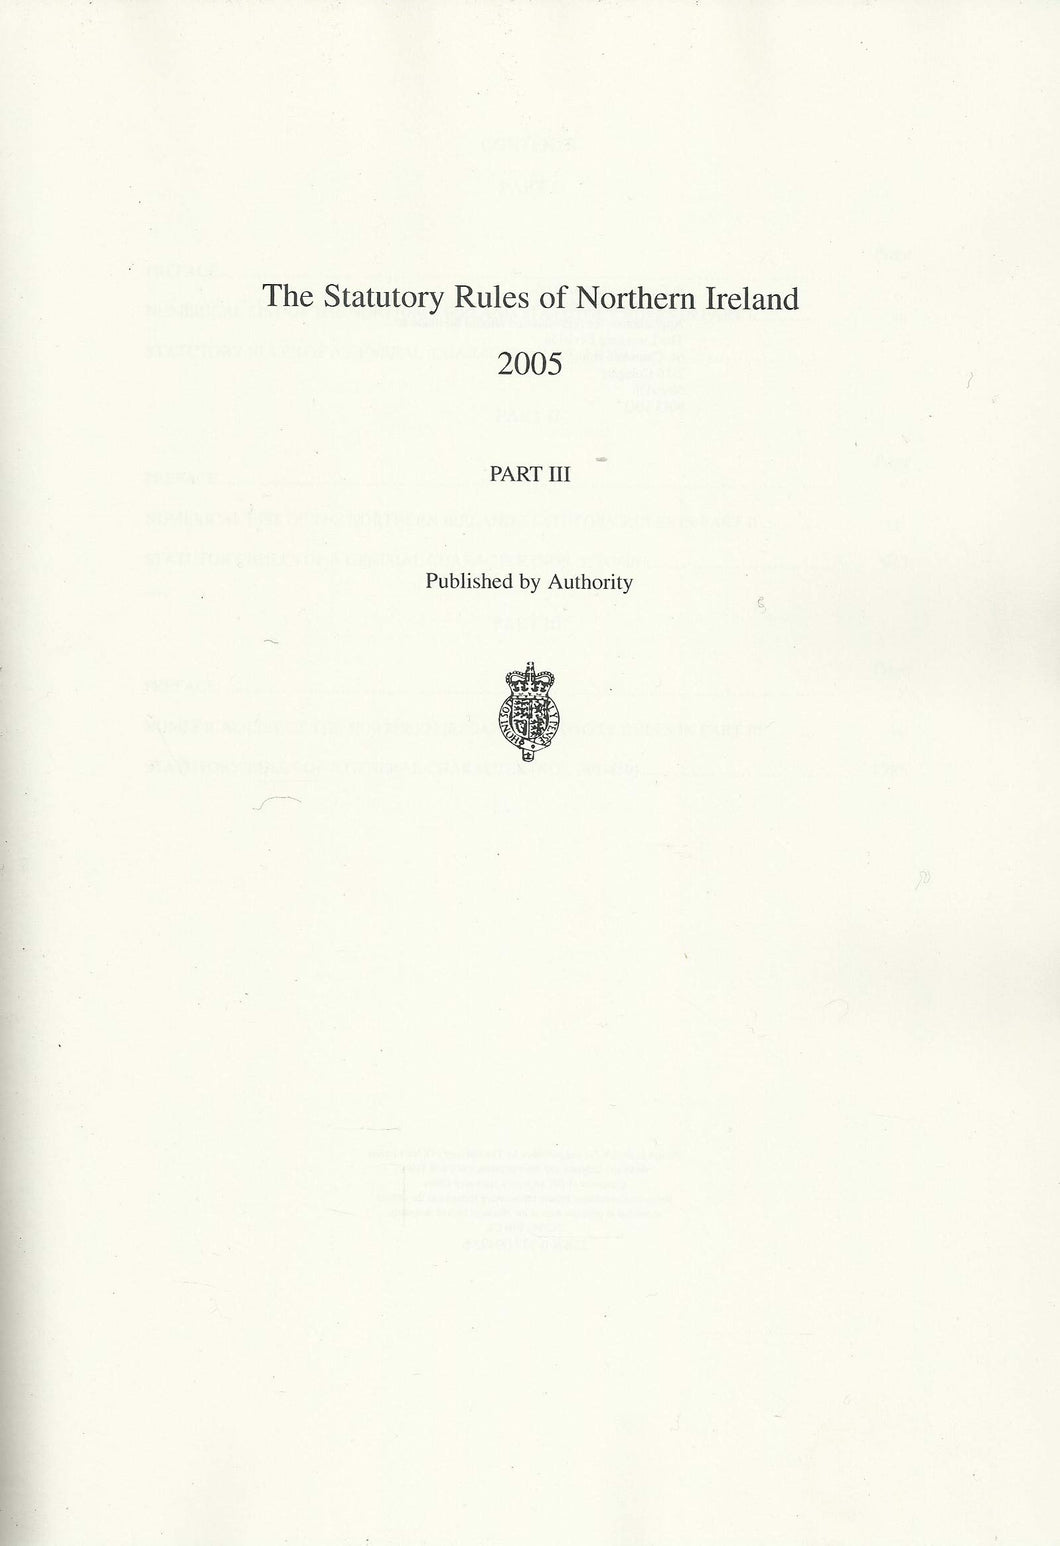 Northern Ireland Statutory Rules 2005, Part III (Part 3) - The Statutory Rules of Northern Ireland